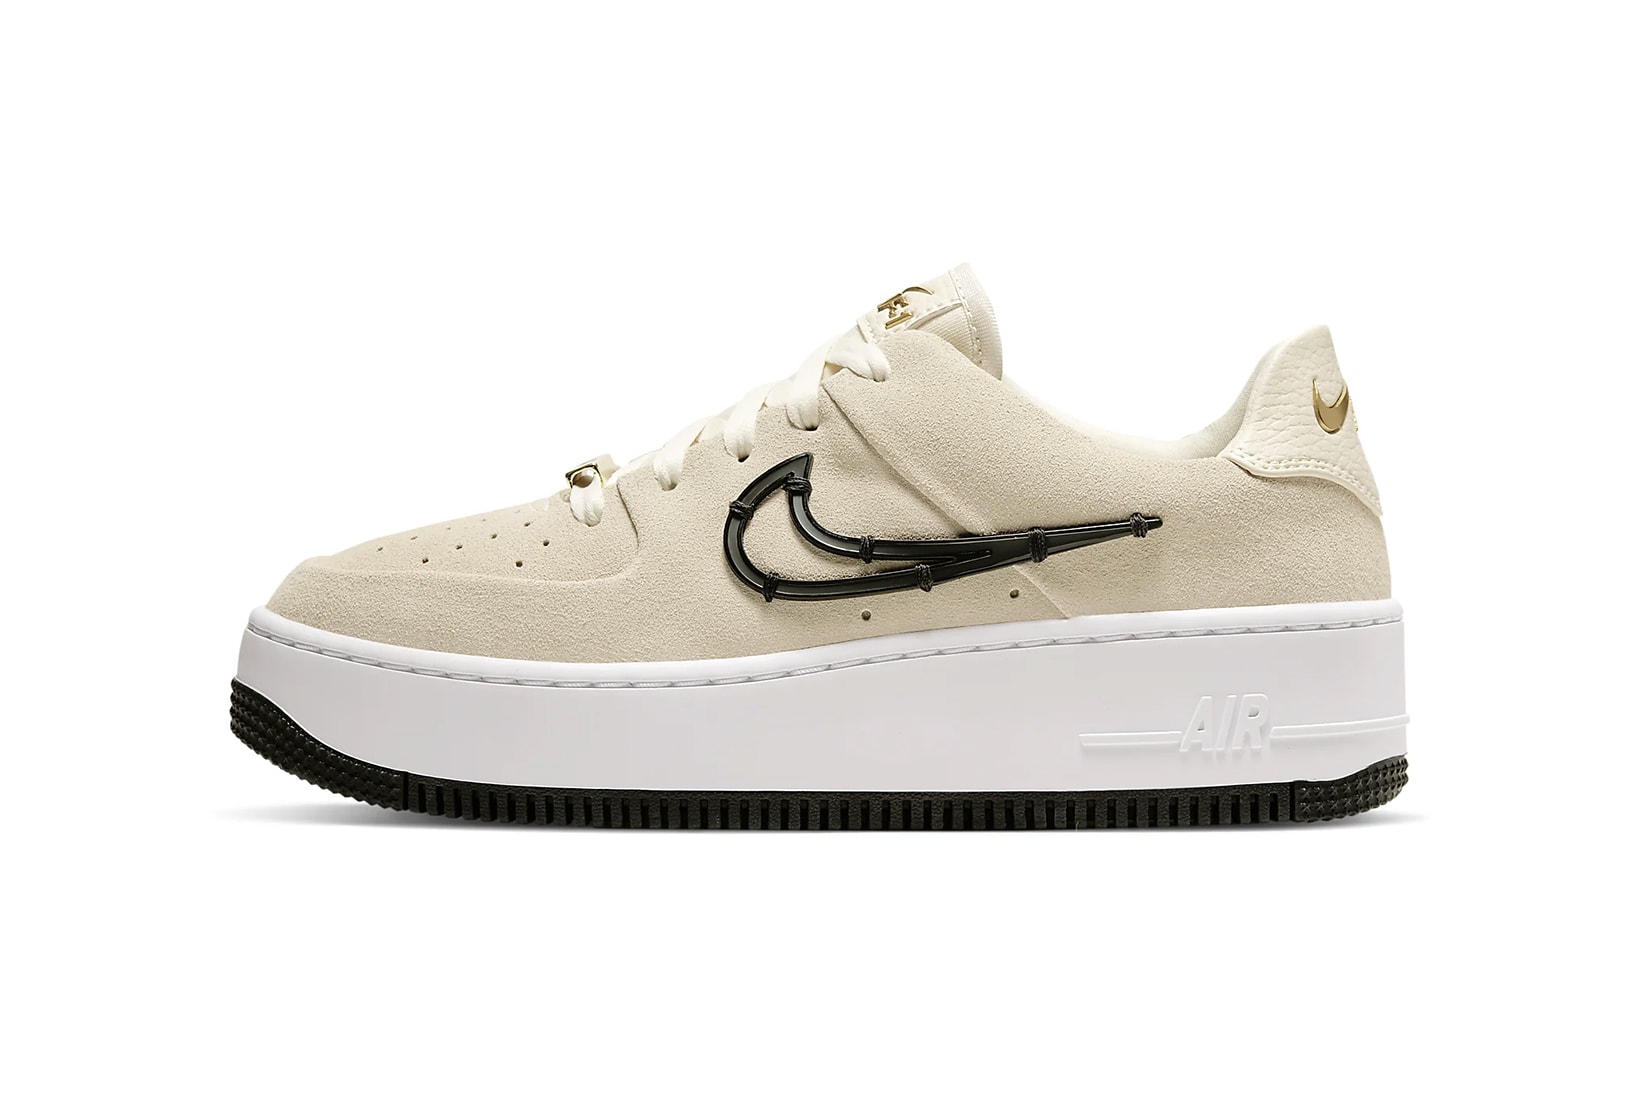 Nike Air Force 1 Low white (Metallic Gold Swoosh Custom)